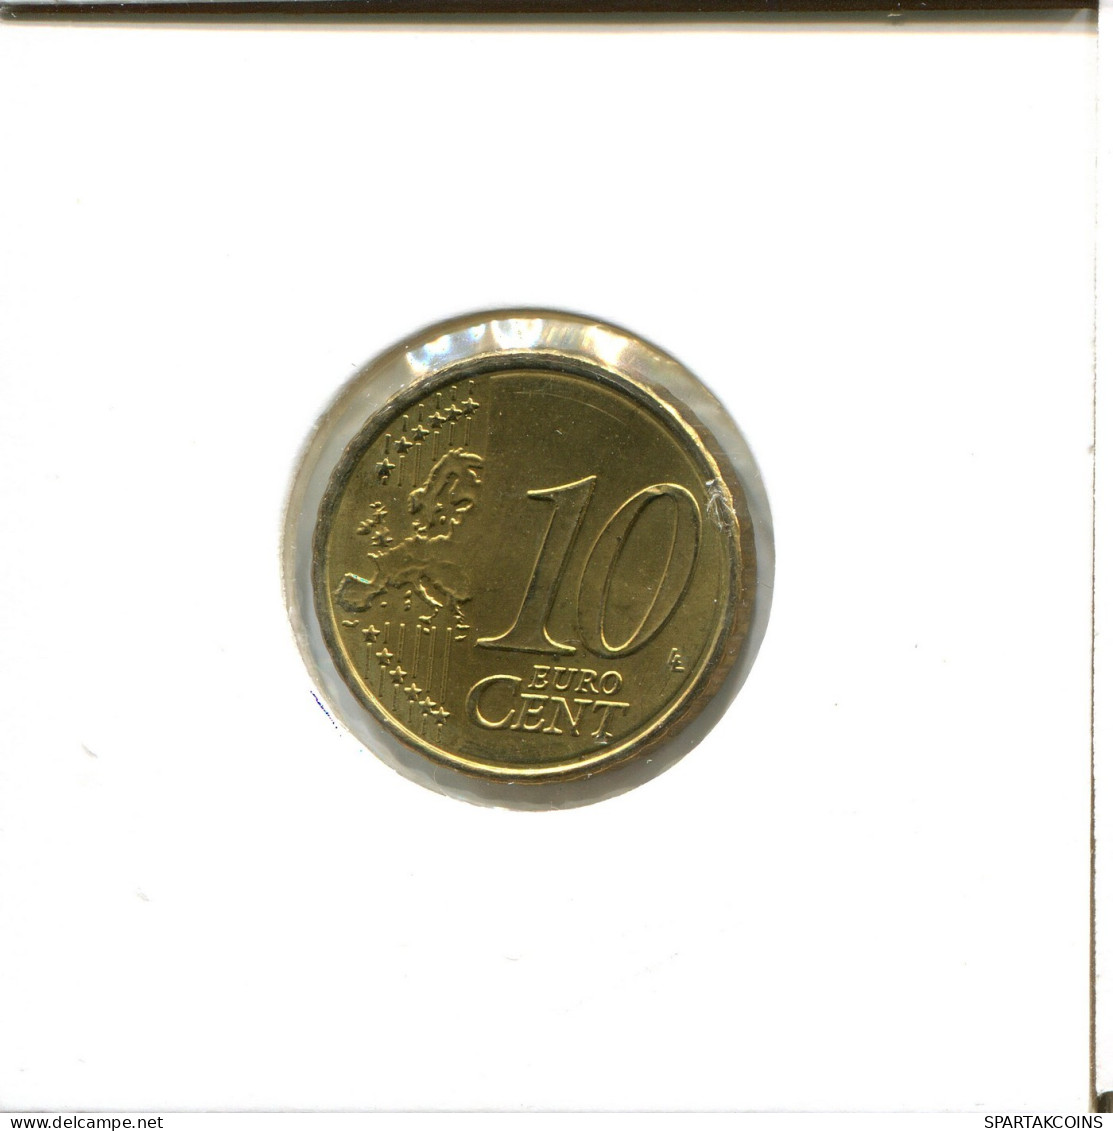 10 EURO CENTS 2012 AUSTRIA Coin #EU387.U.A - Austria